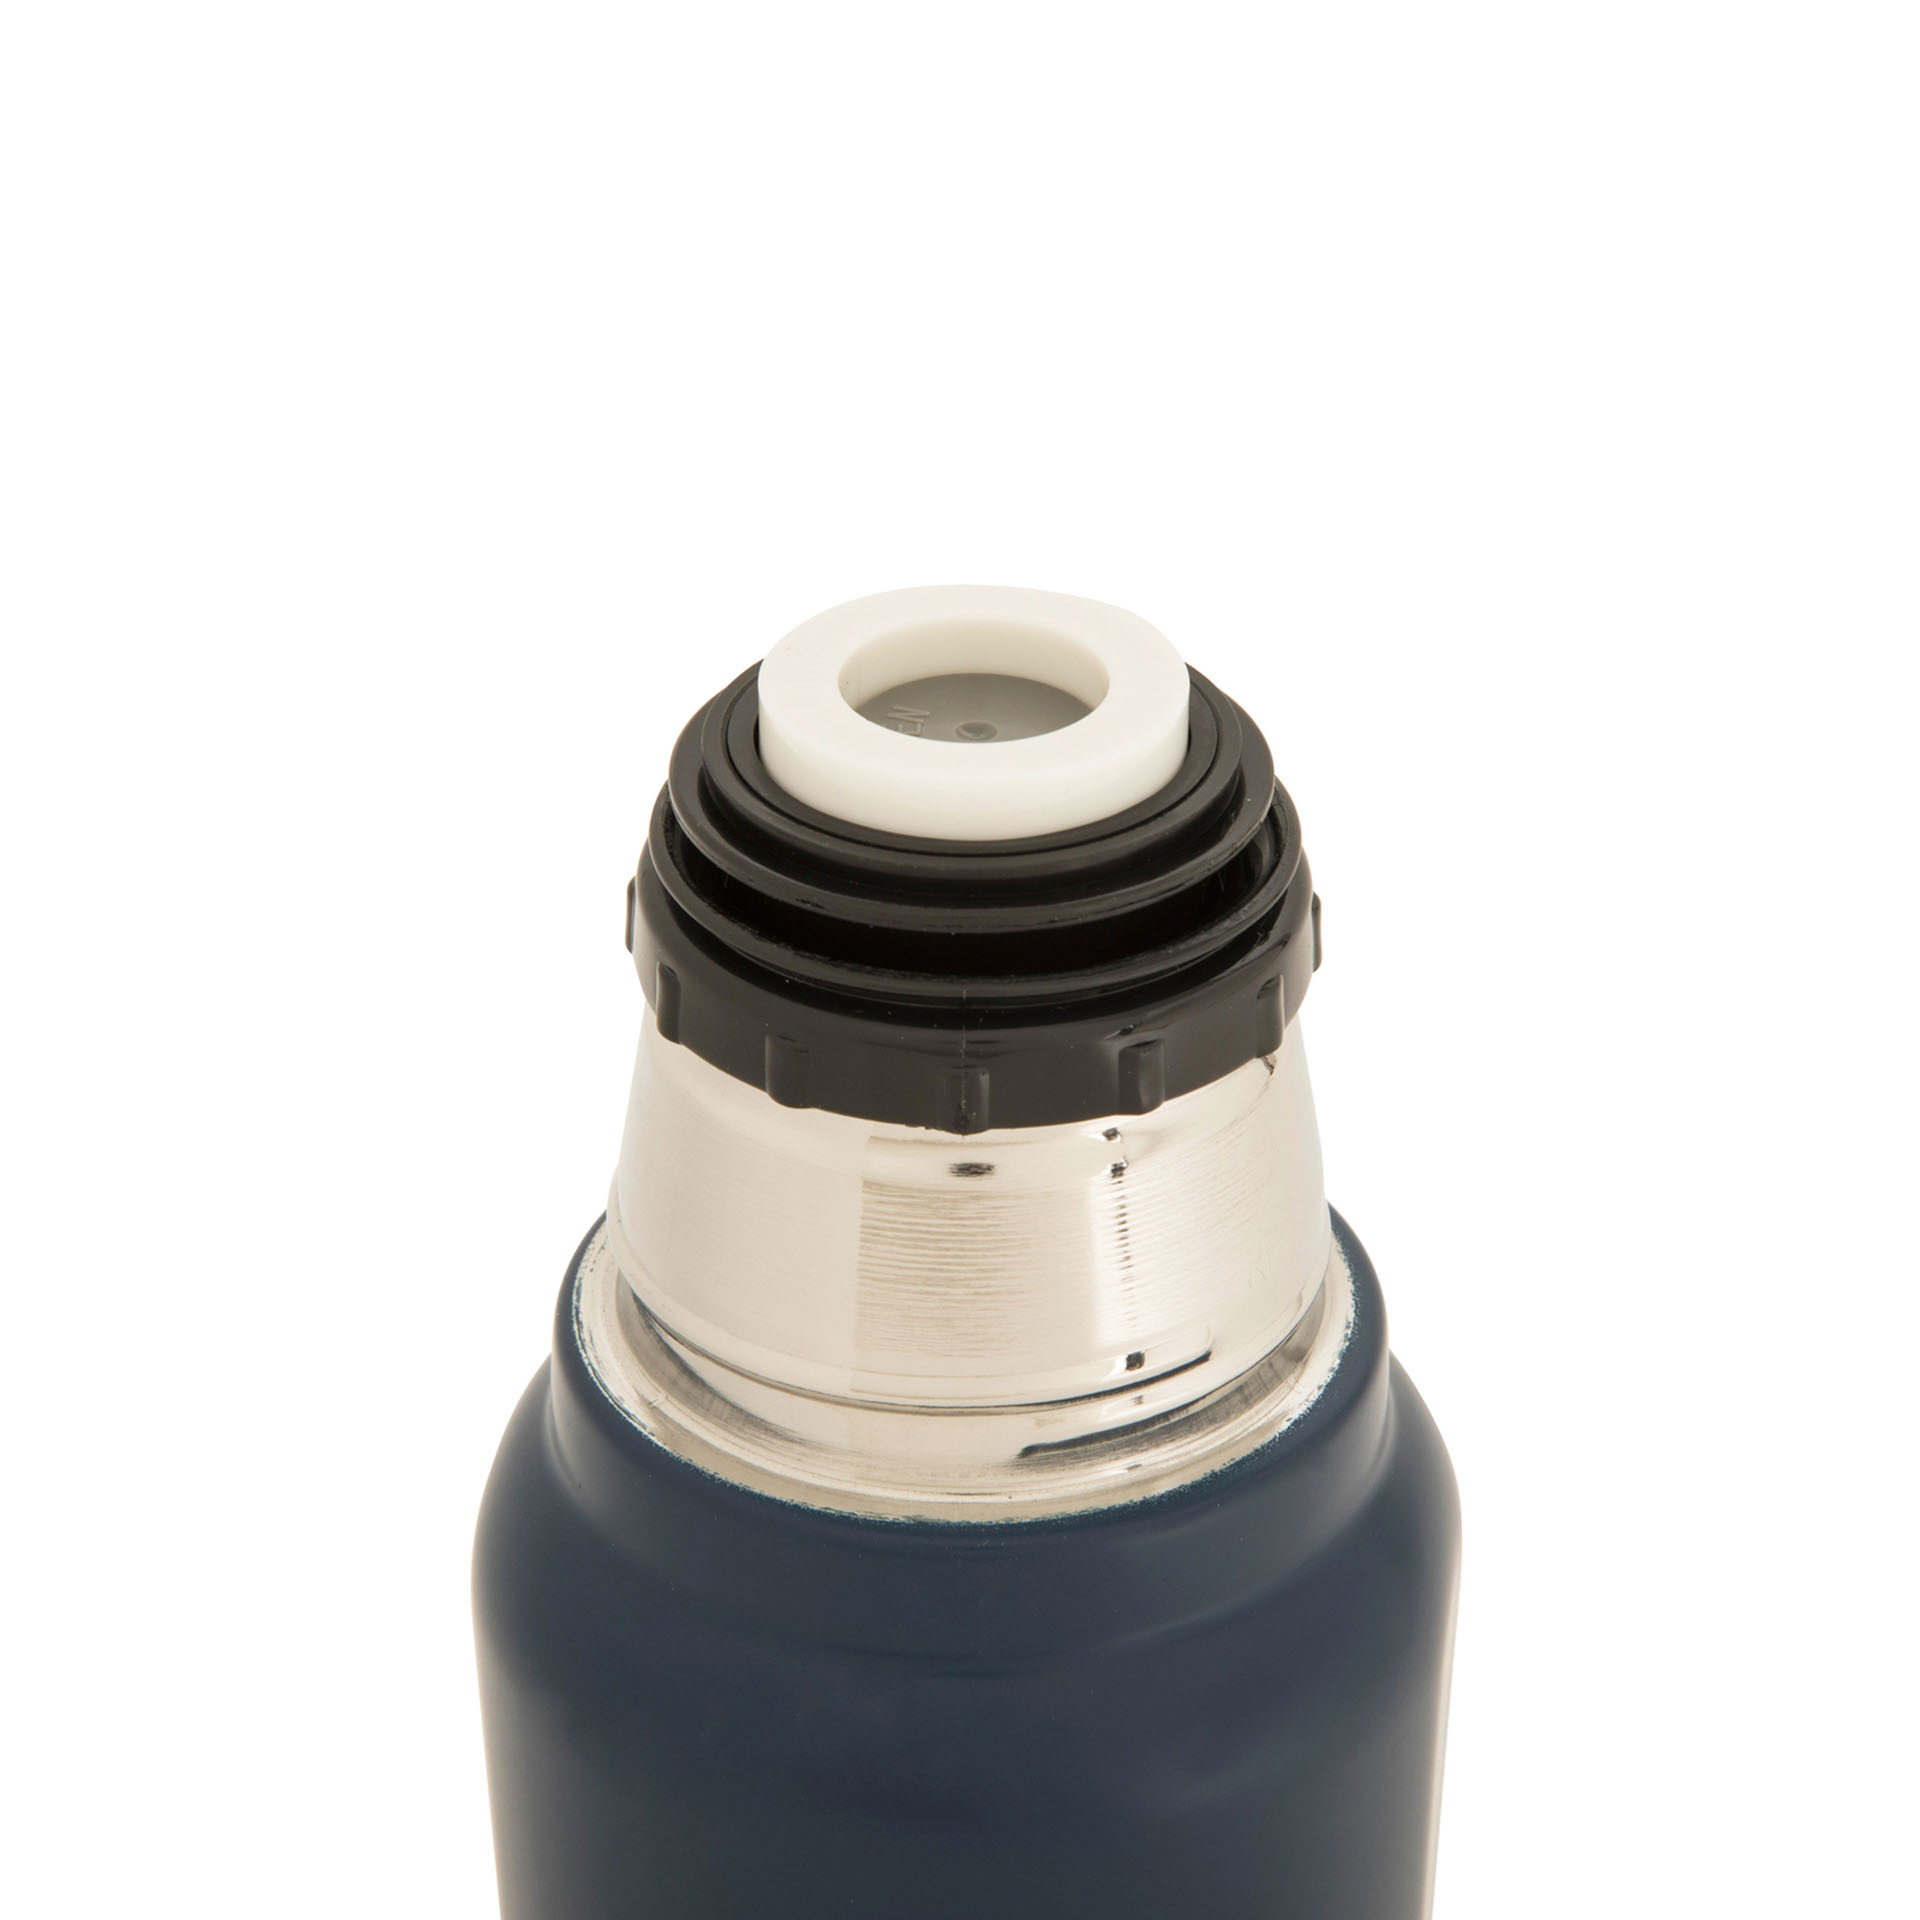 Bottiglia Termica In Acciaio Inox - 500 Ml, , large